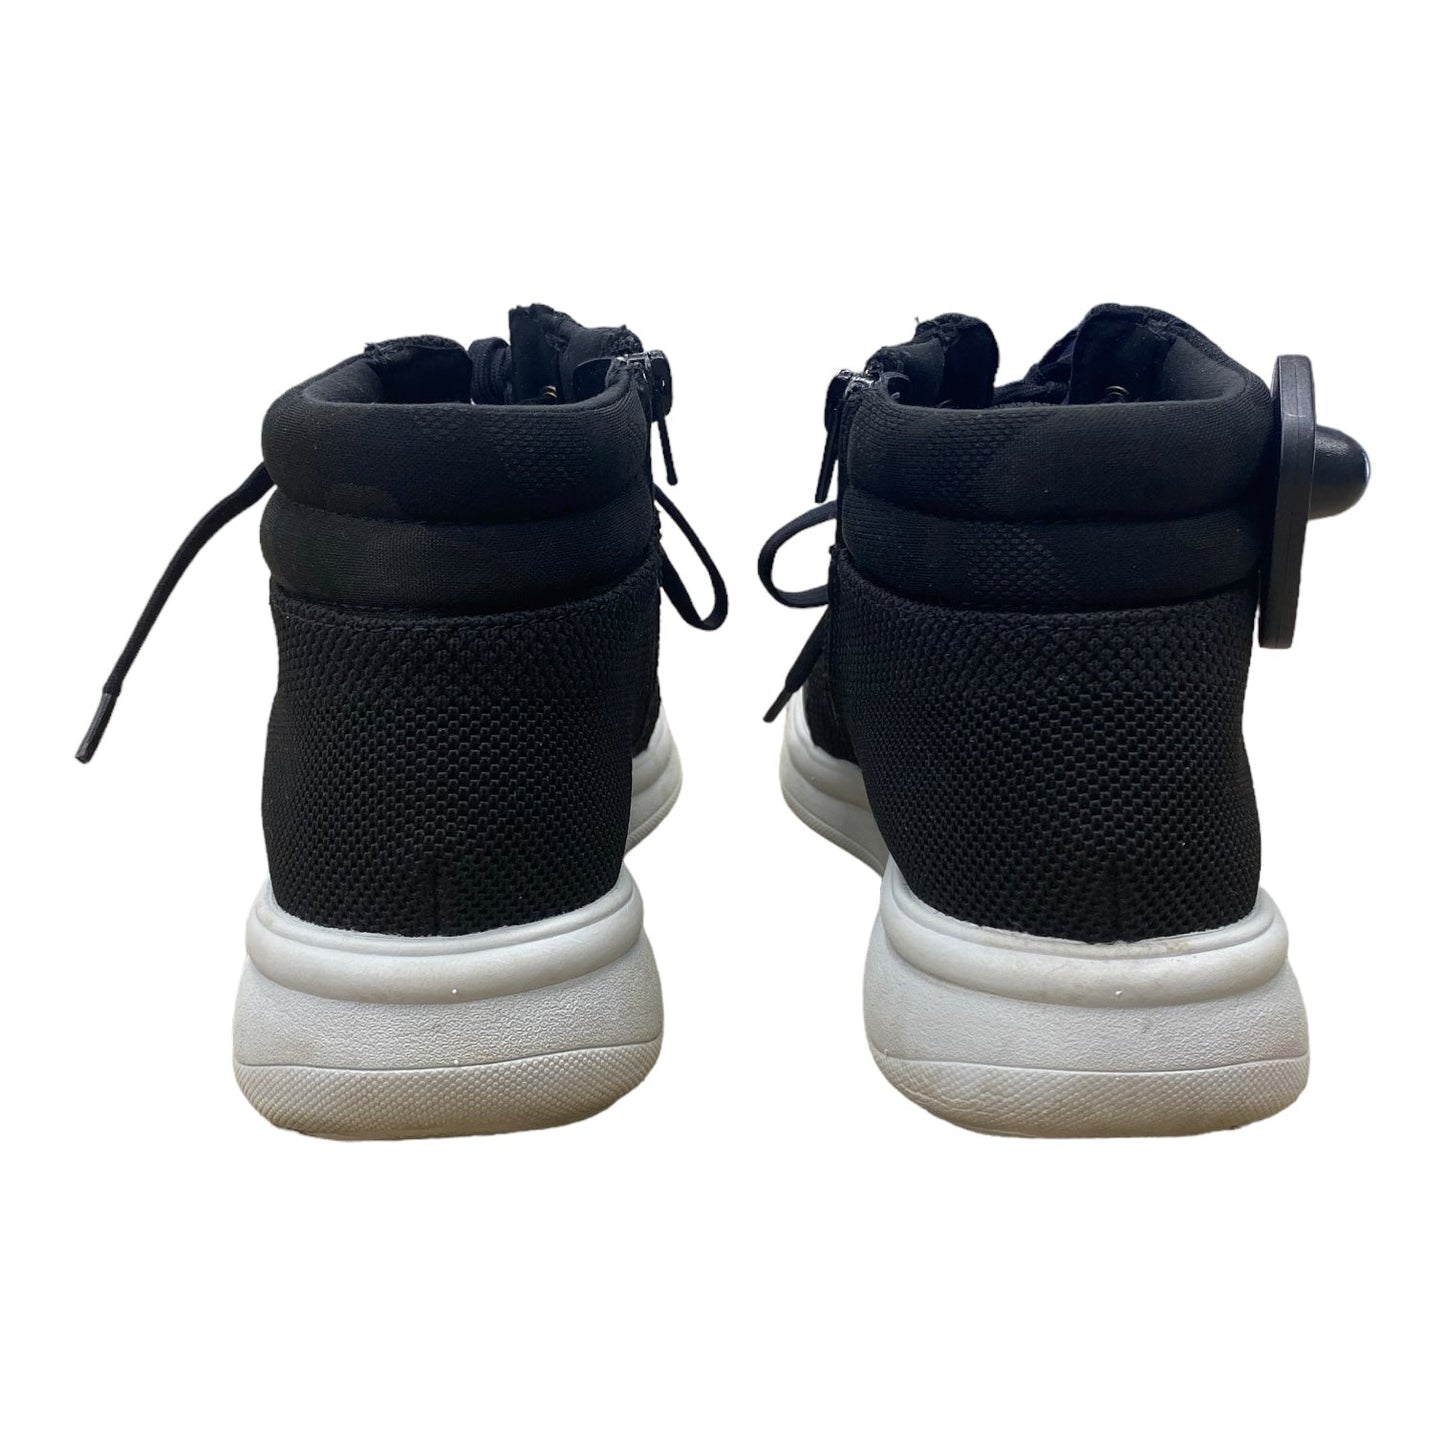 Black Shoes Athletic Clarks, Size 6